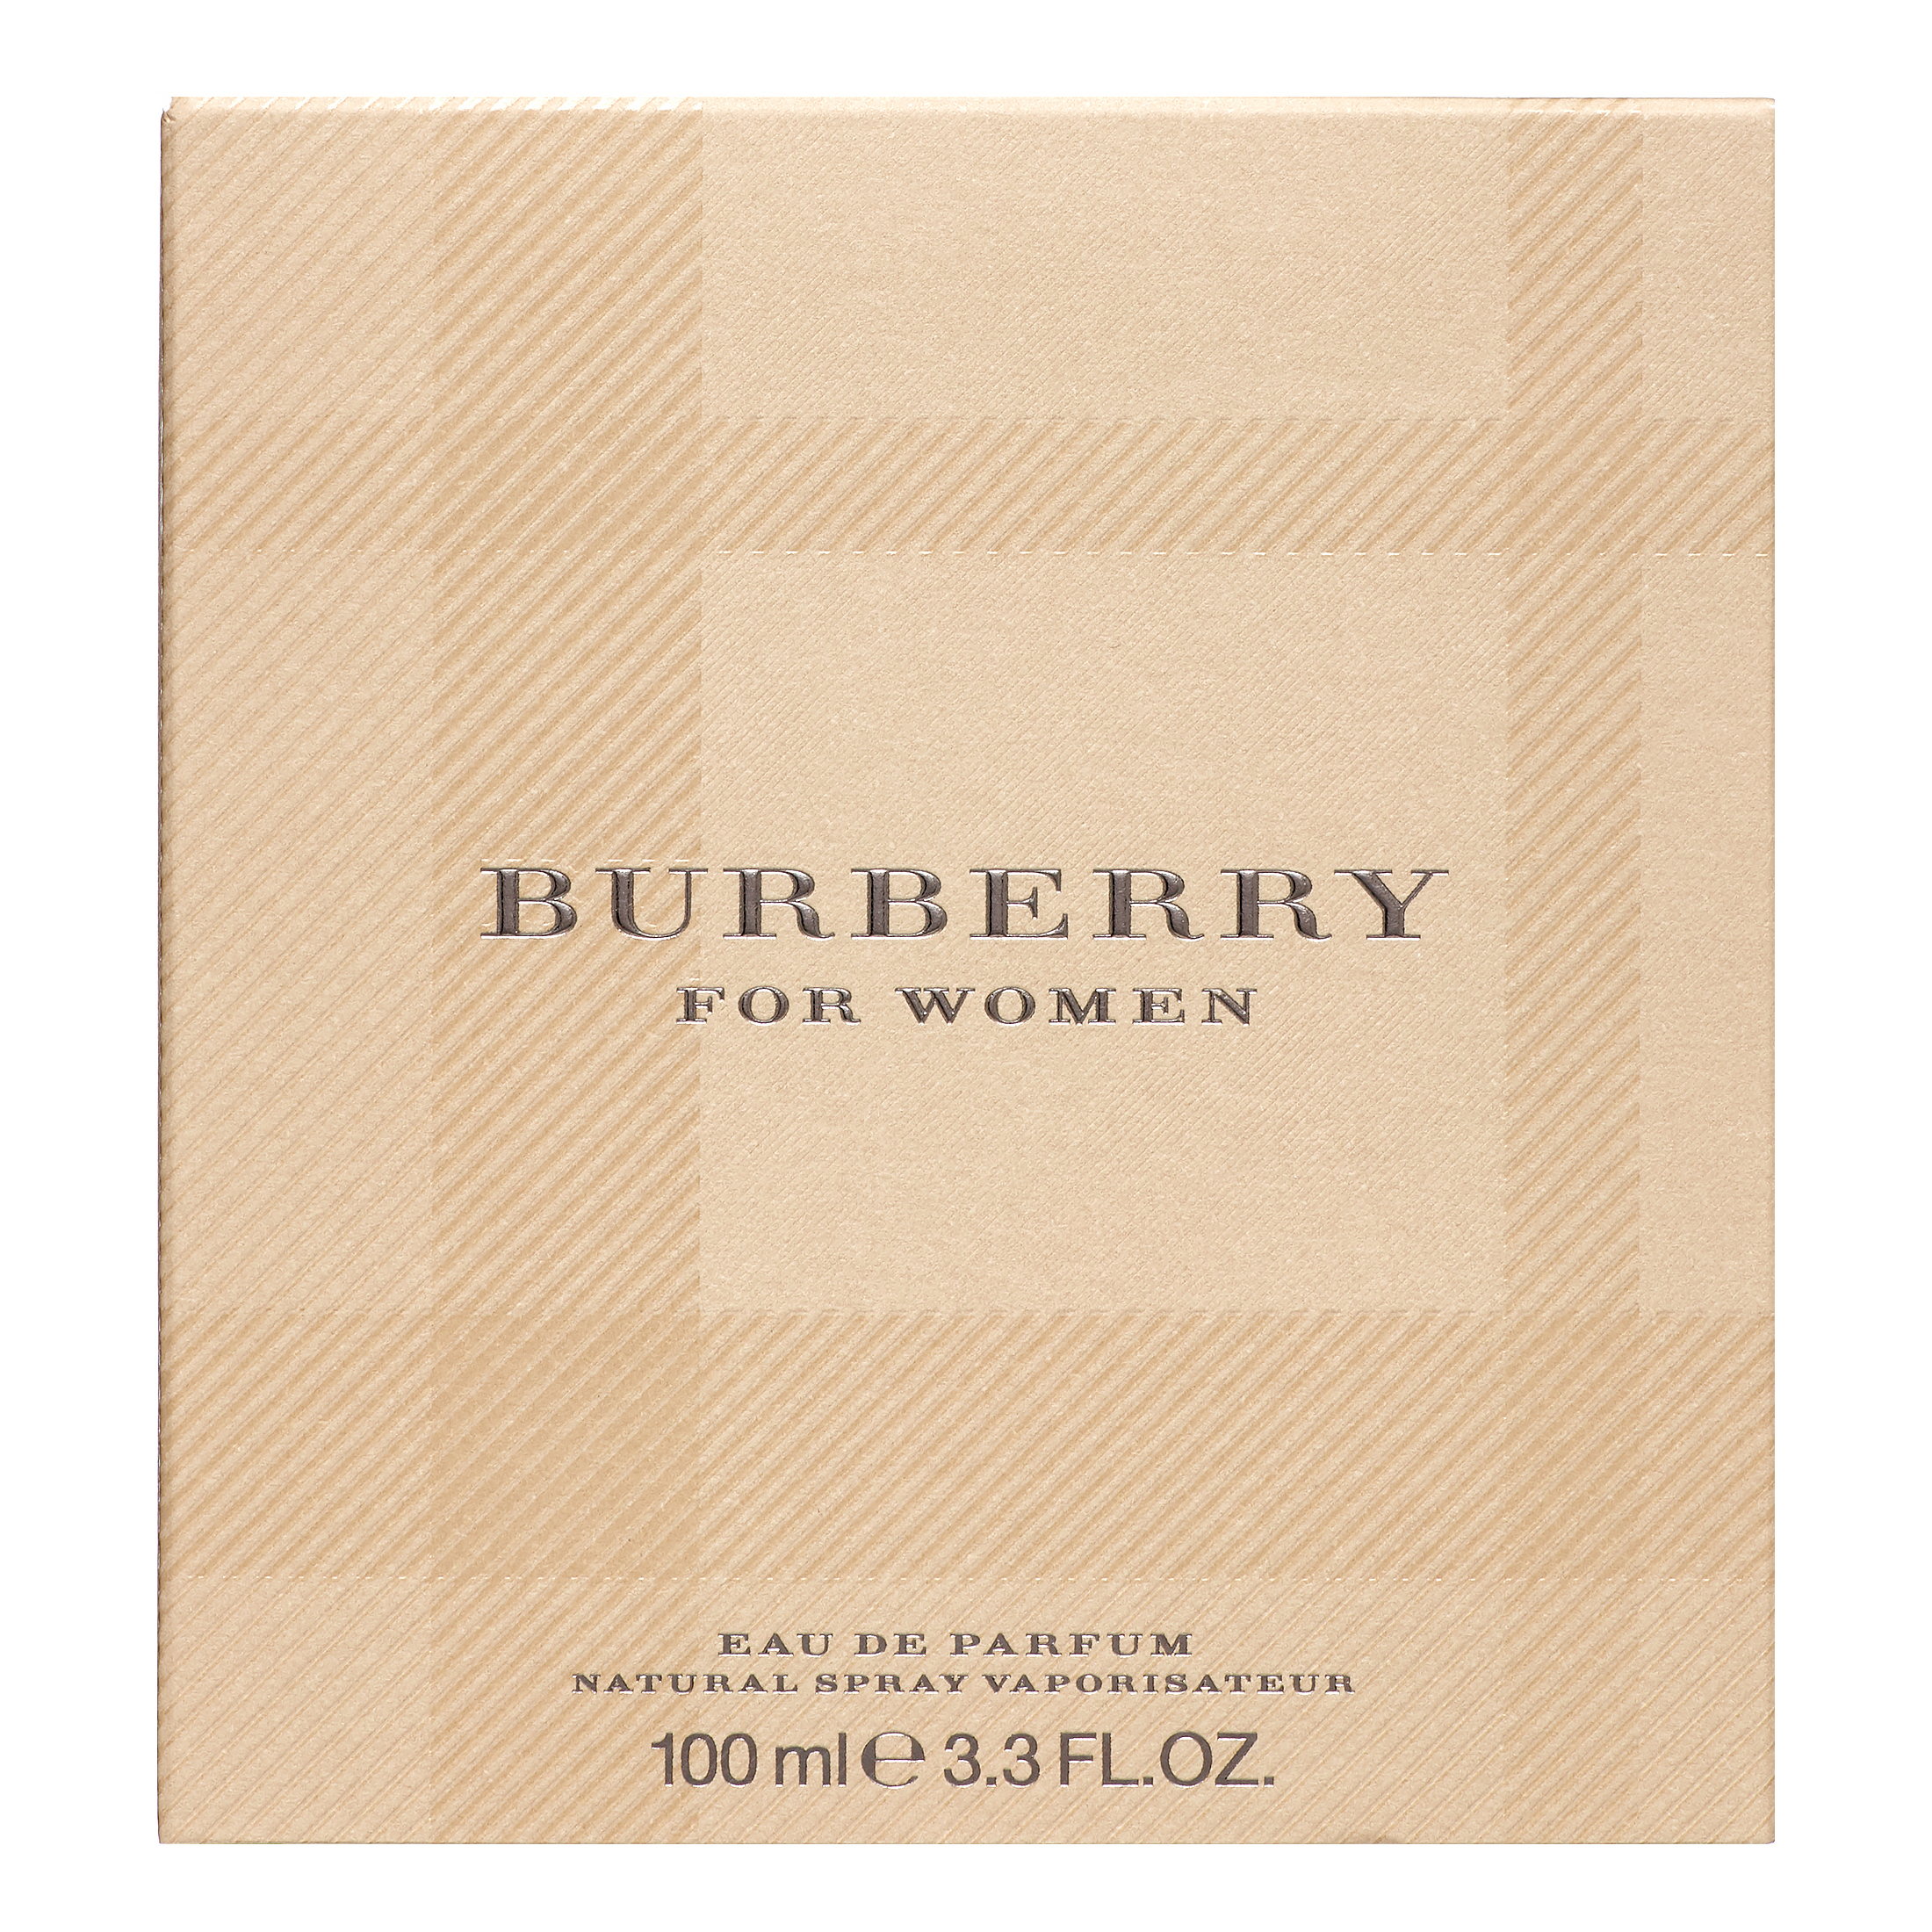 Burberry Classic Eau De Parfum, Perfume for Women, 3.3 oz - image 3 of 6